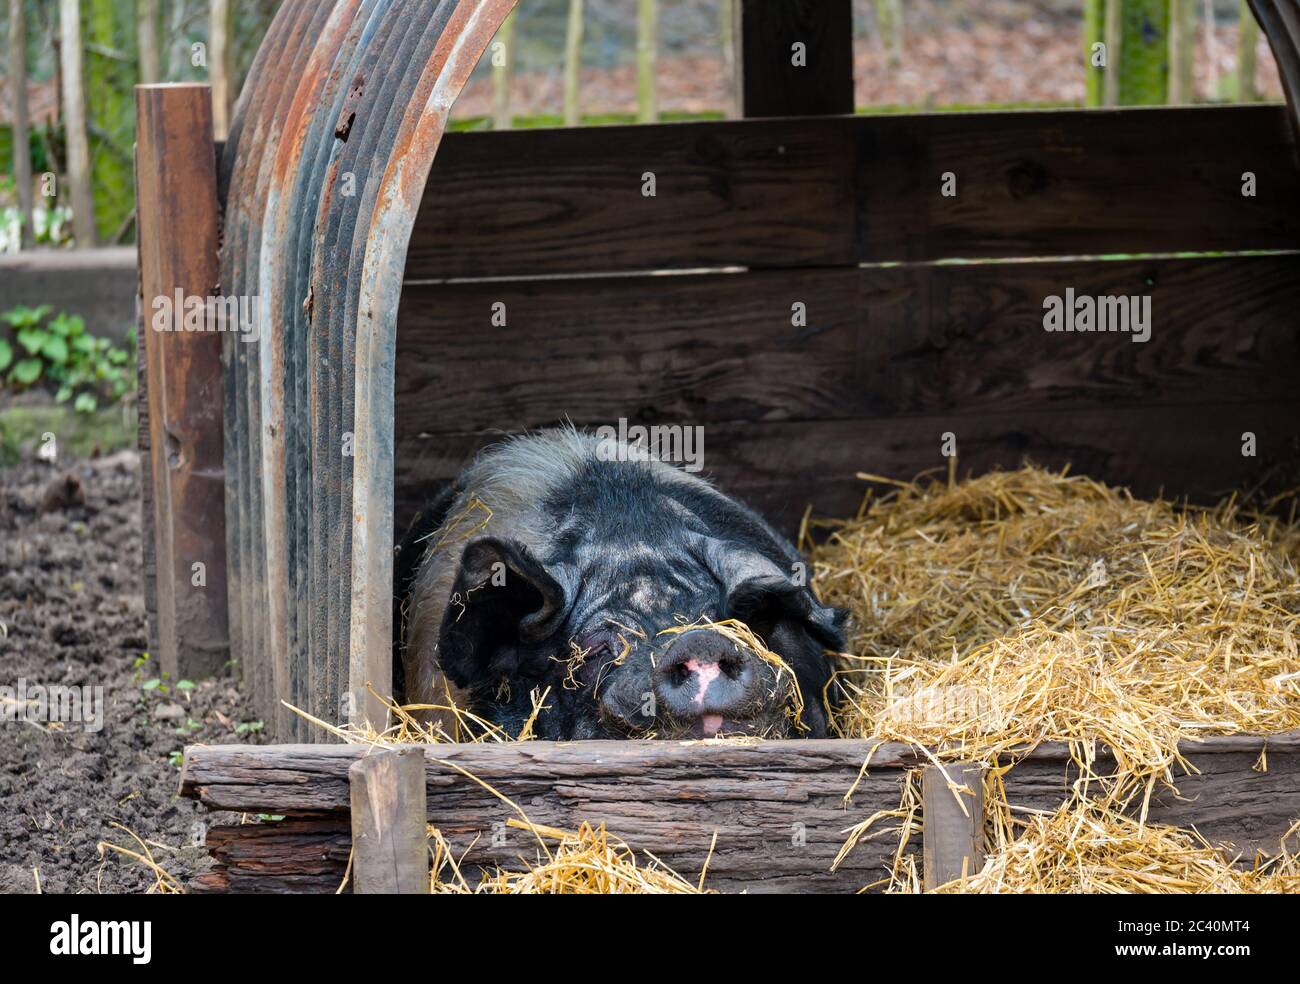 Sleeping pig in hay, 1940s farm, Beamish Museum, Durham County, England, UK Stock Photo